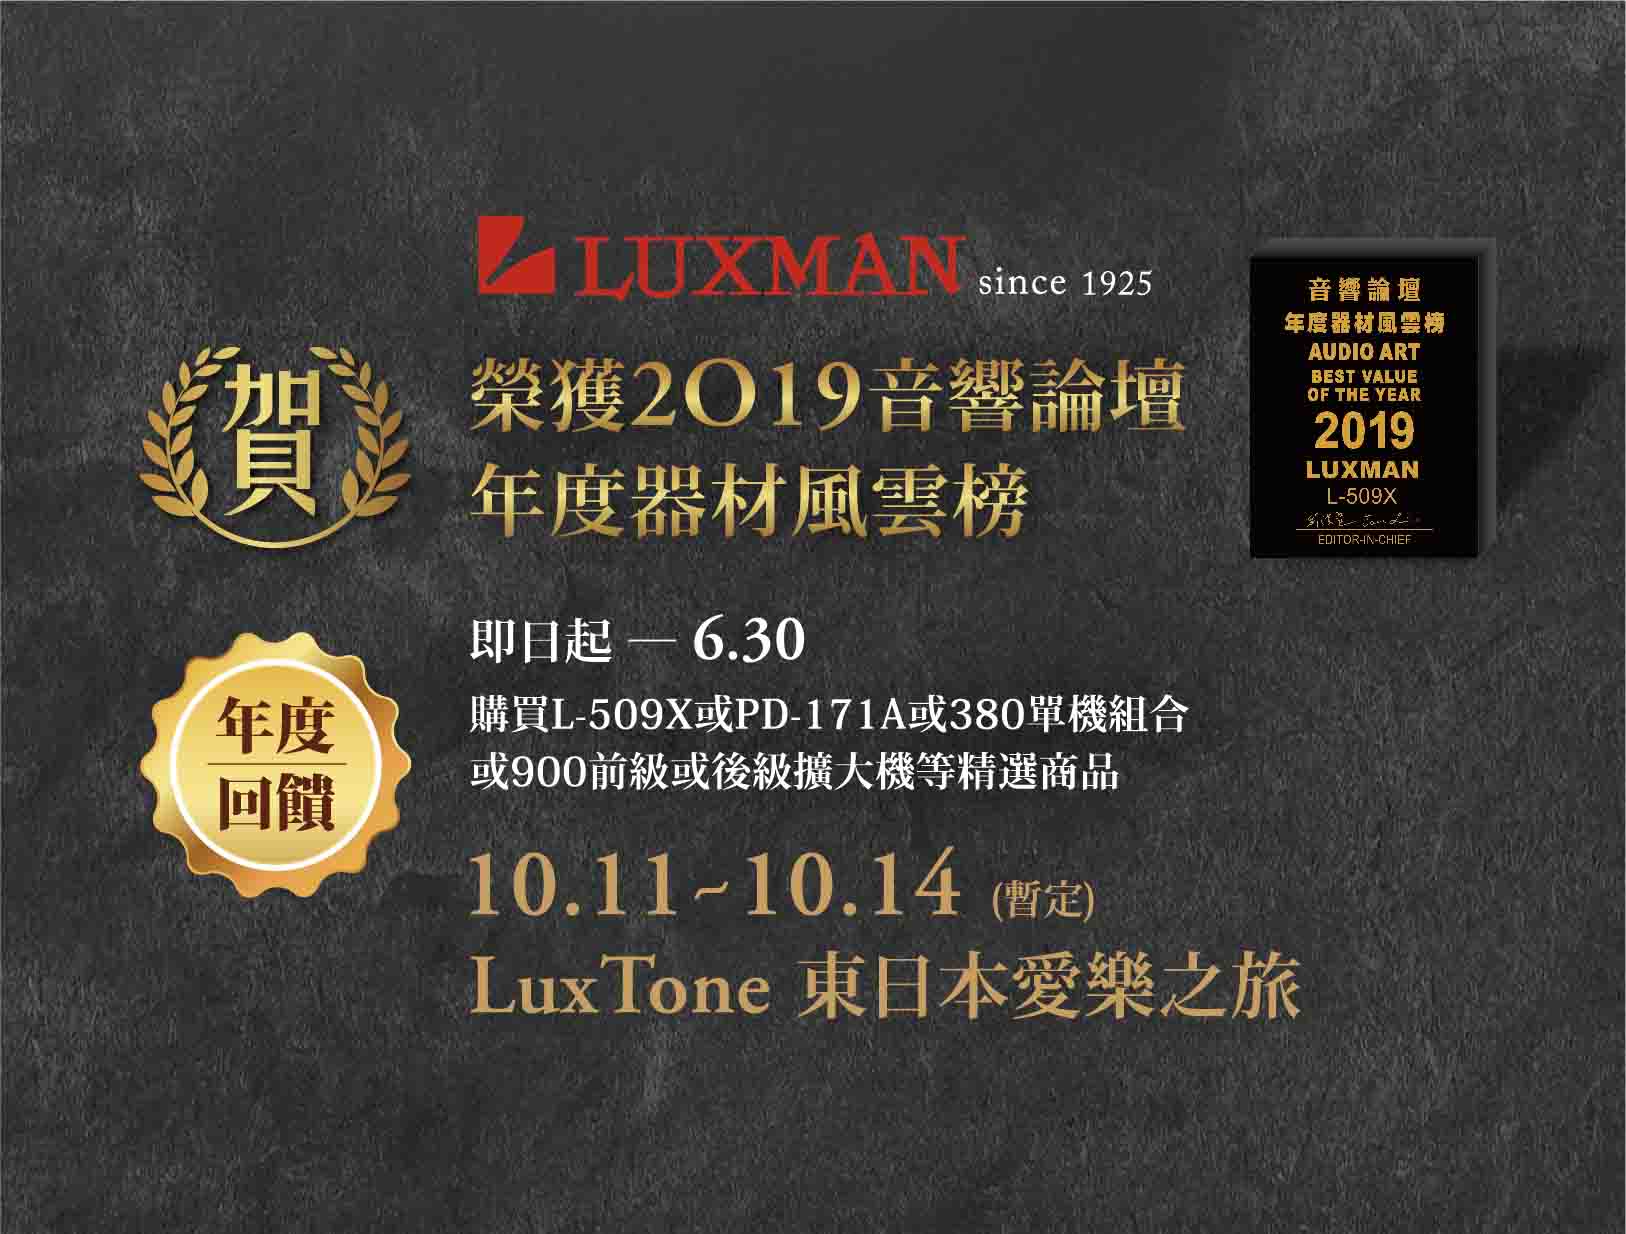 LUXMAN 榮獲2019</br>音響論壇年度器材風雲榜